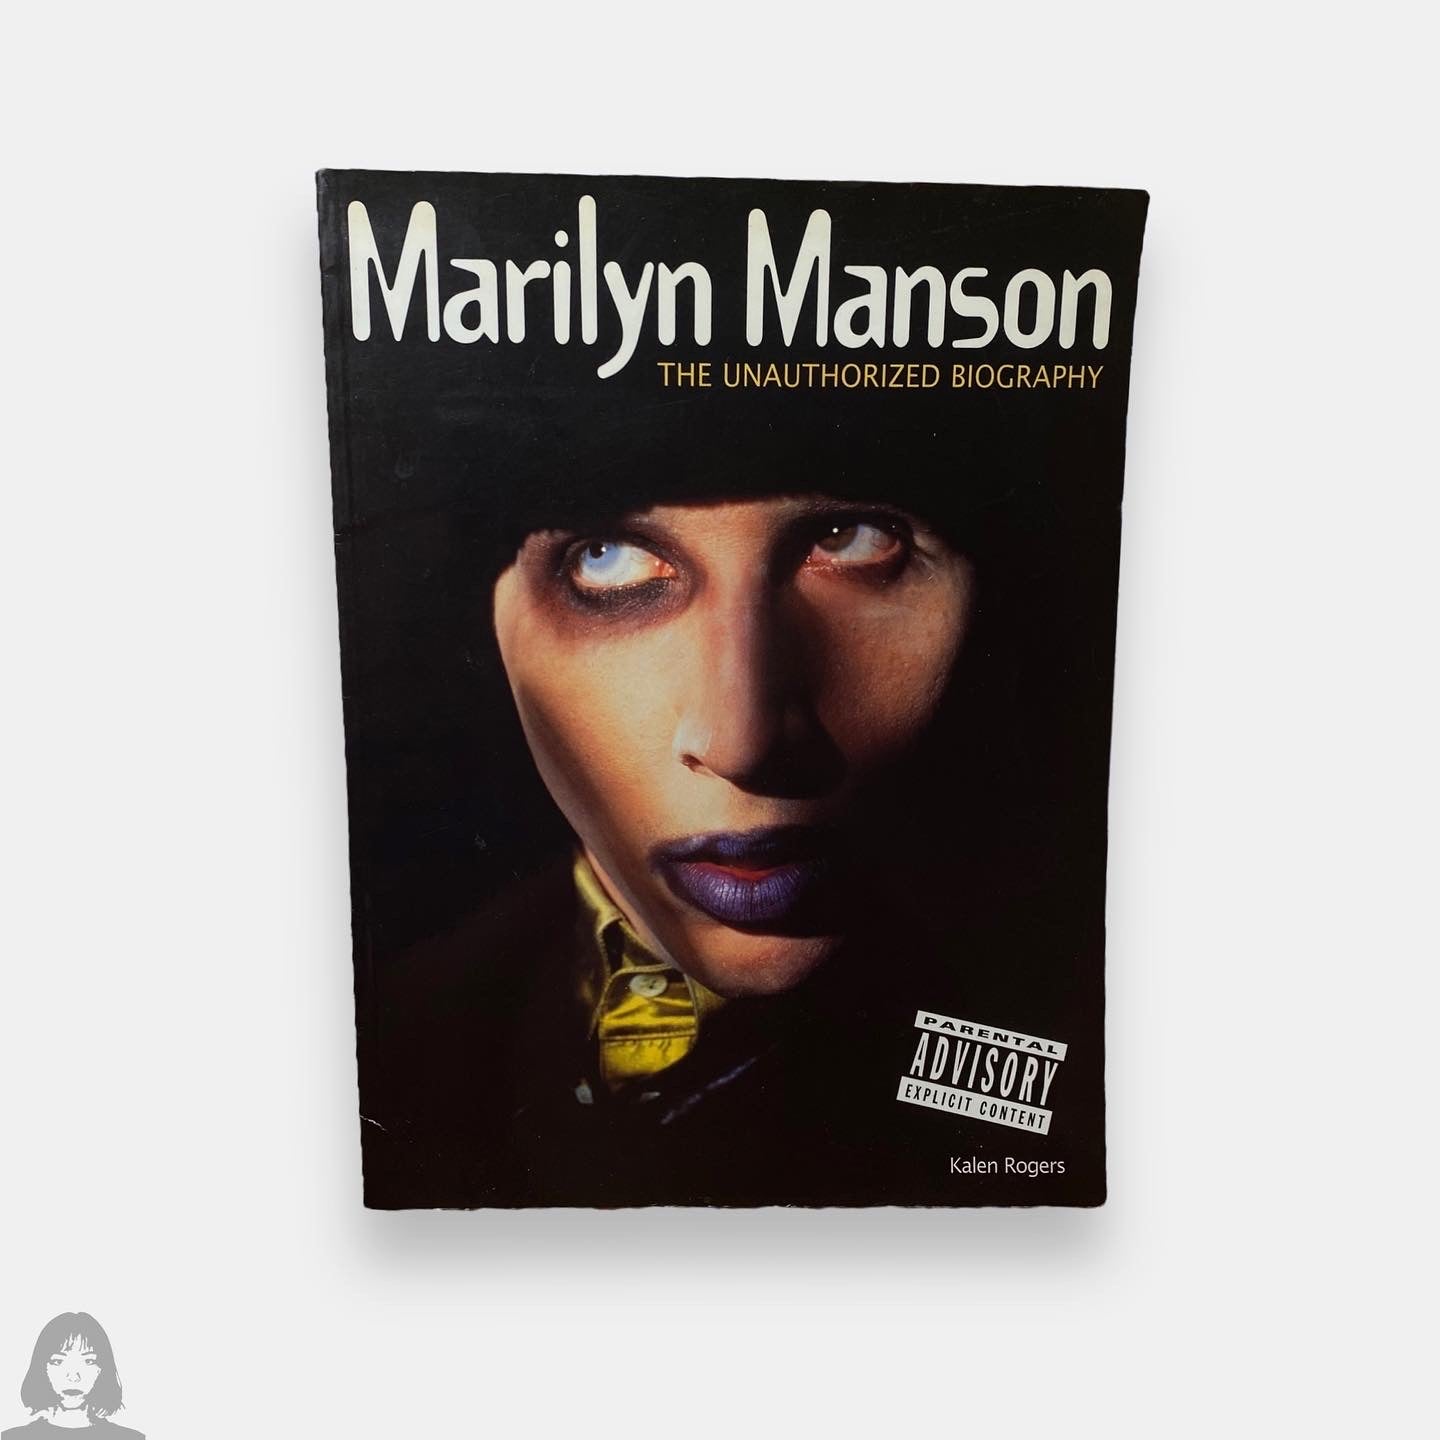 MARILYN MANSON BOOK